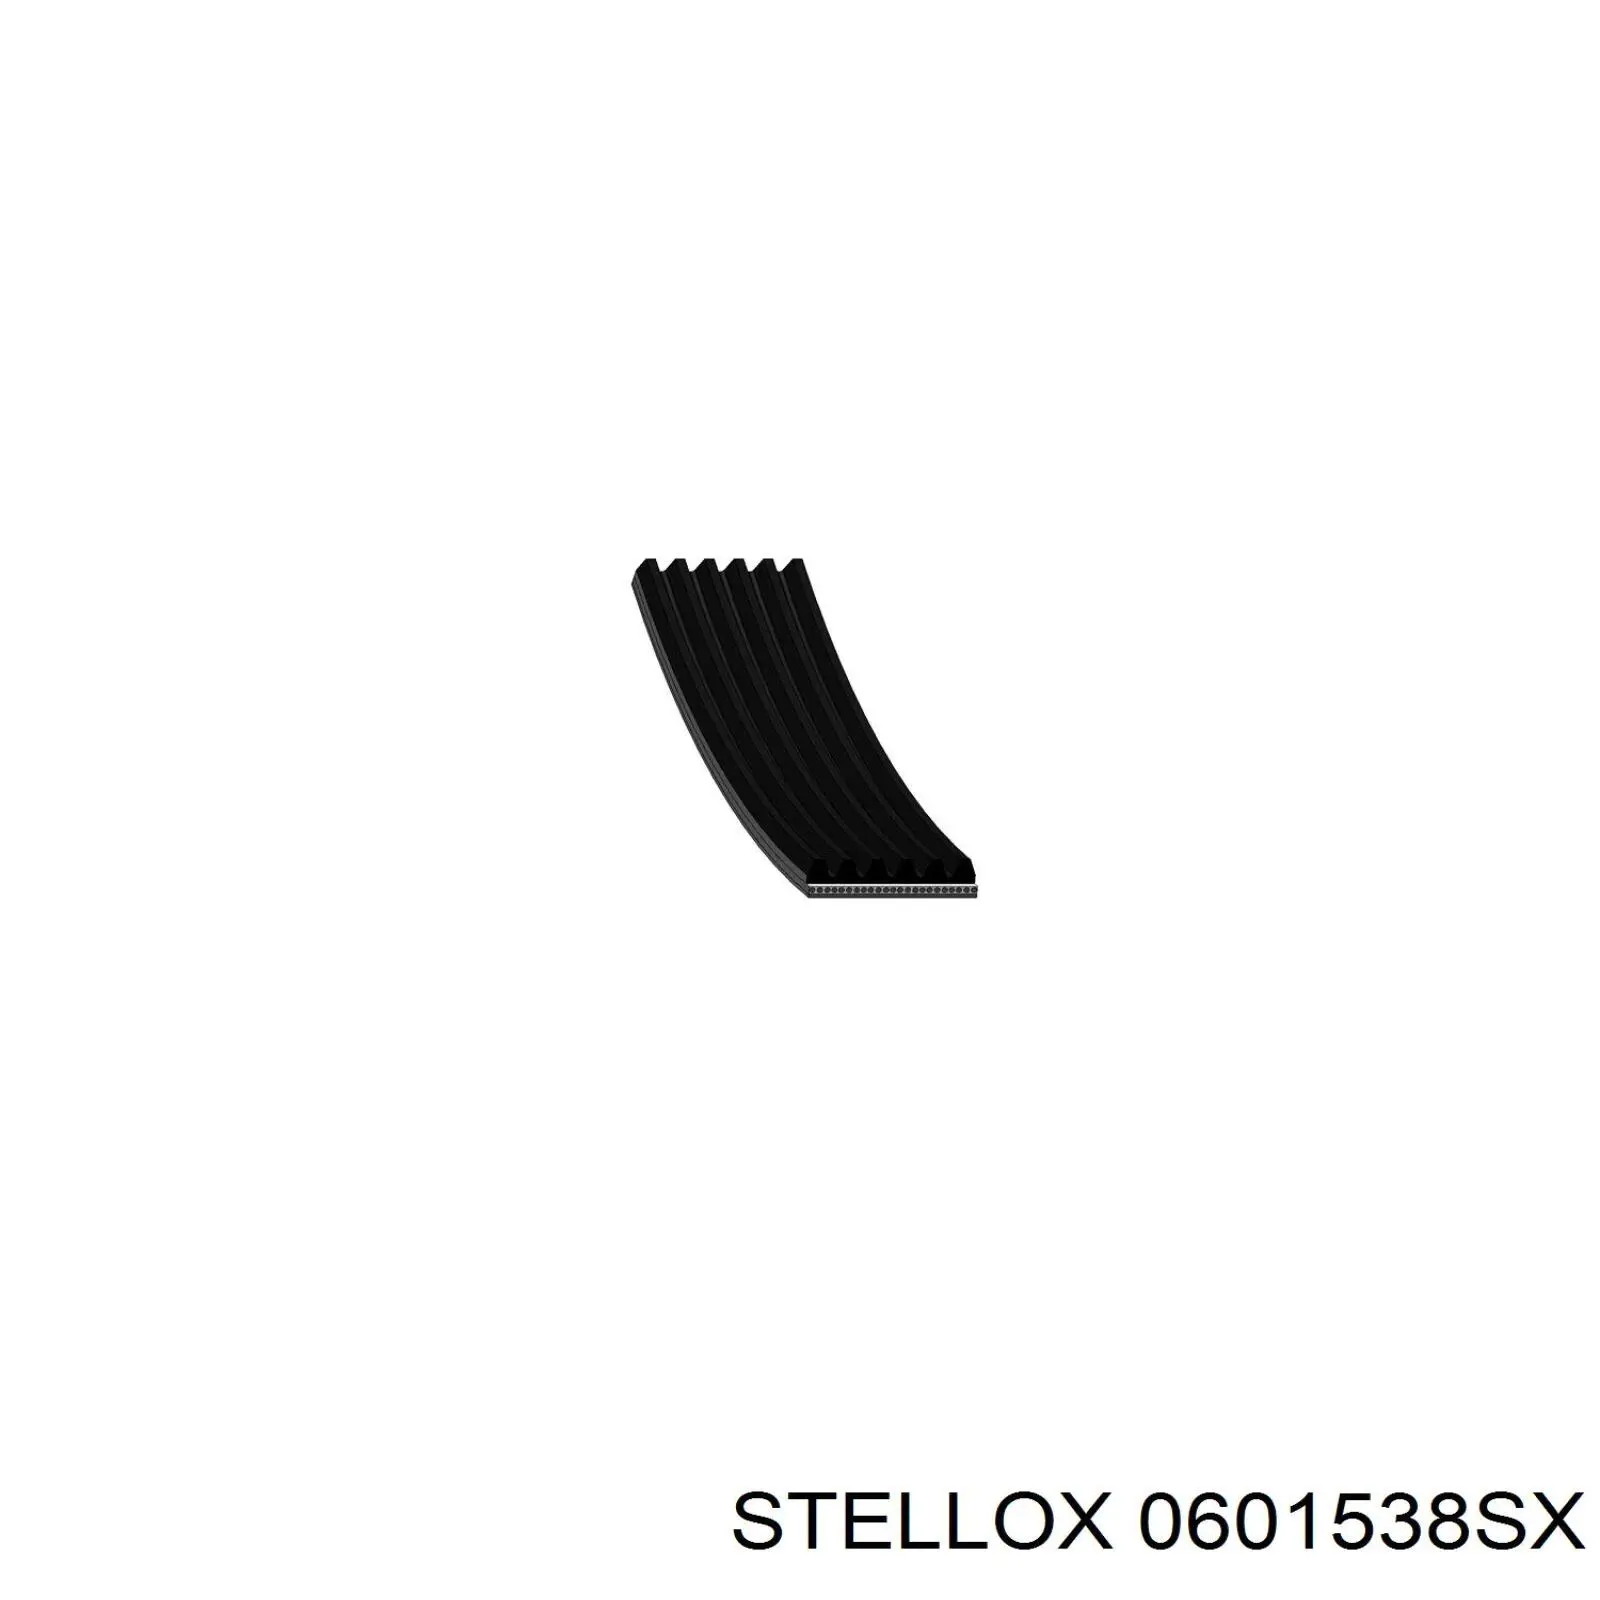 06-01538-SX Stellox correa trapezoidal